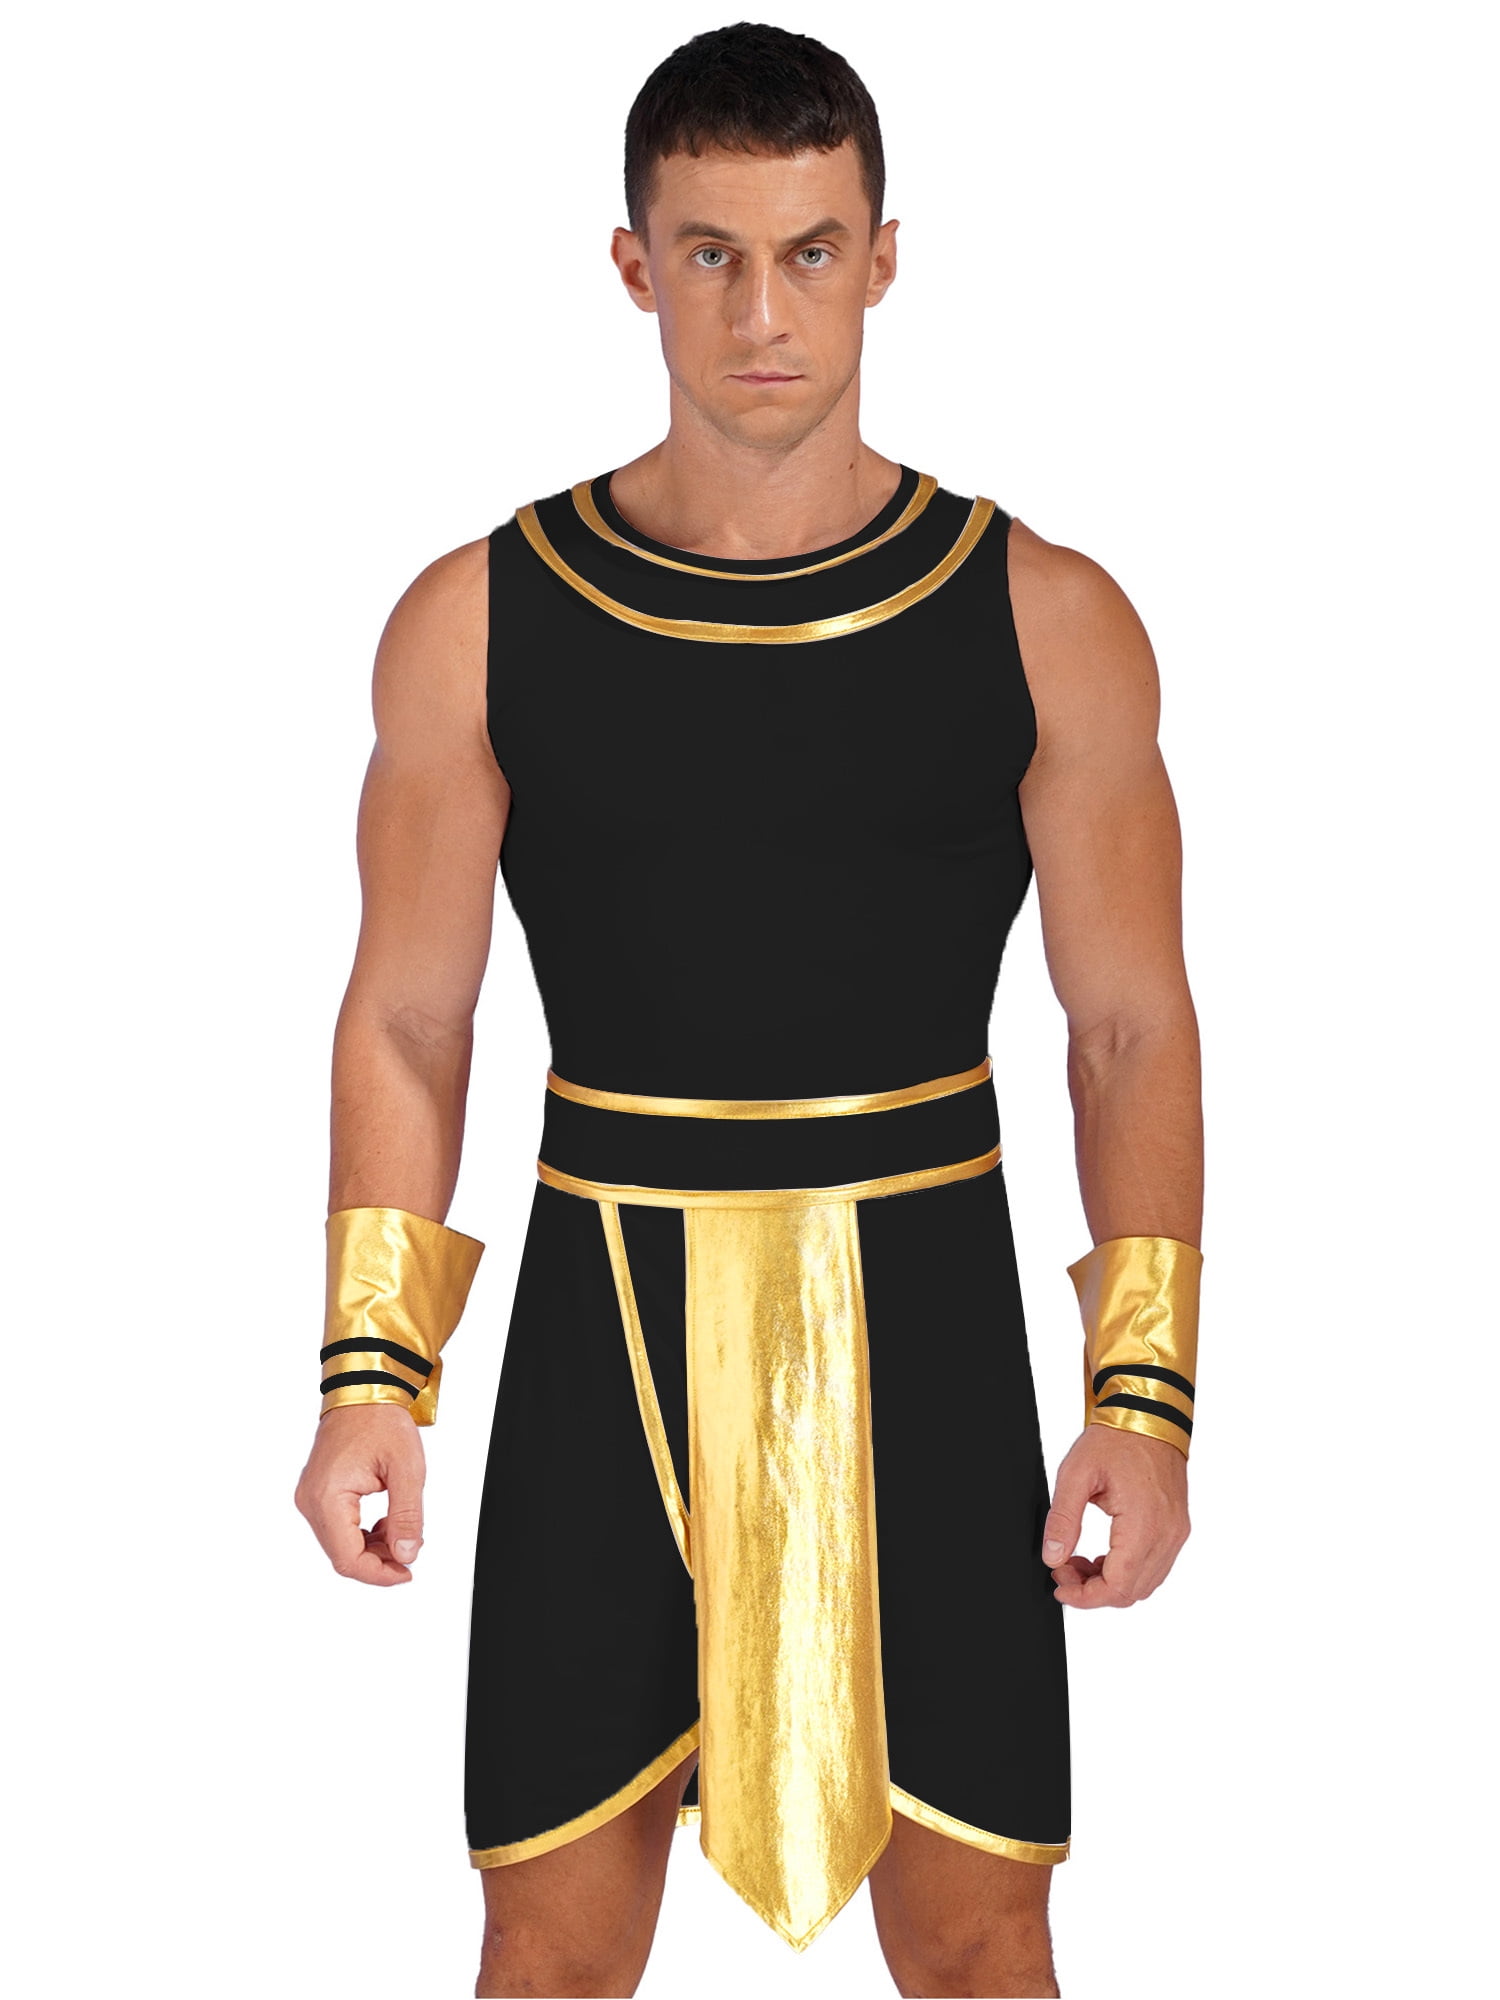 inhzoy Mens 3PCs Mens Ancient Egypt Greek Gladiator Warrior